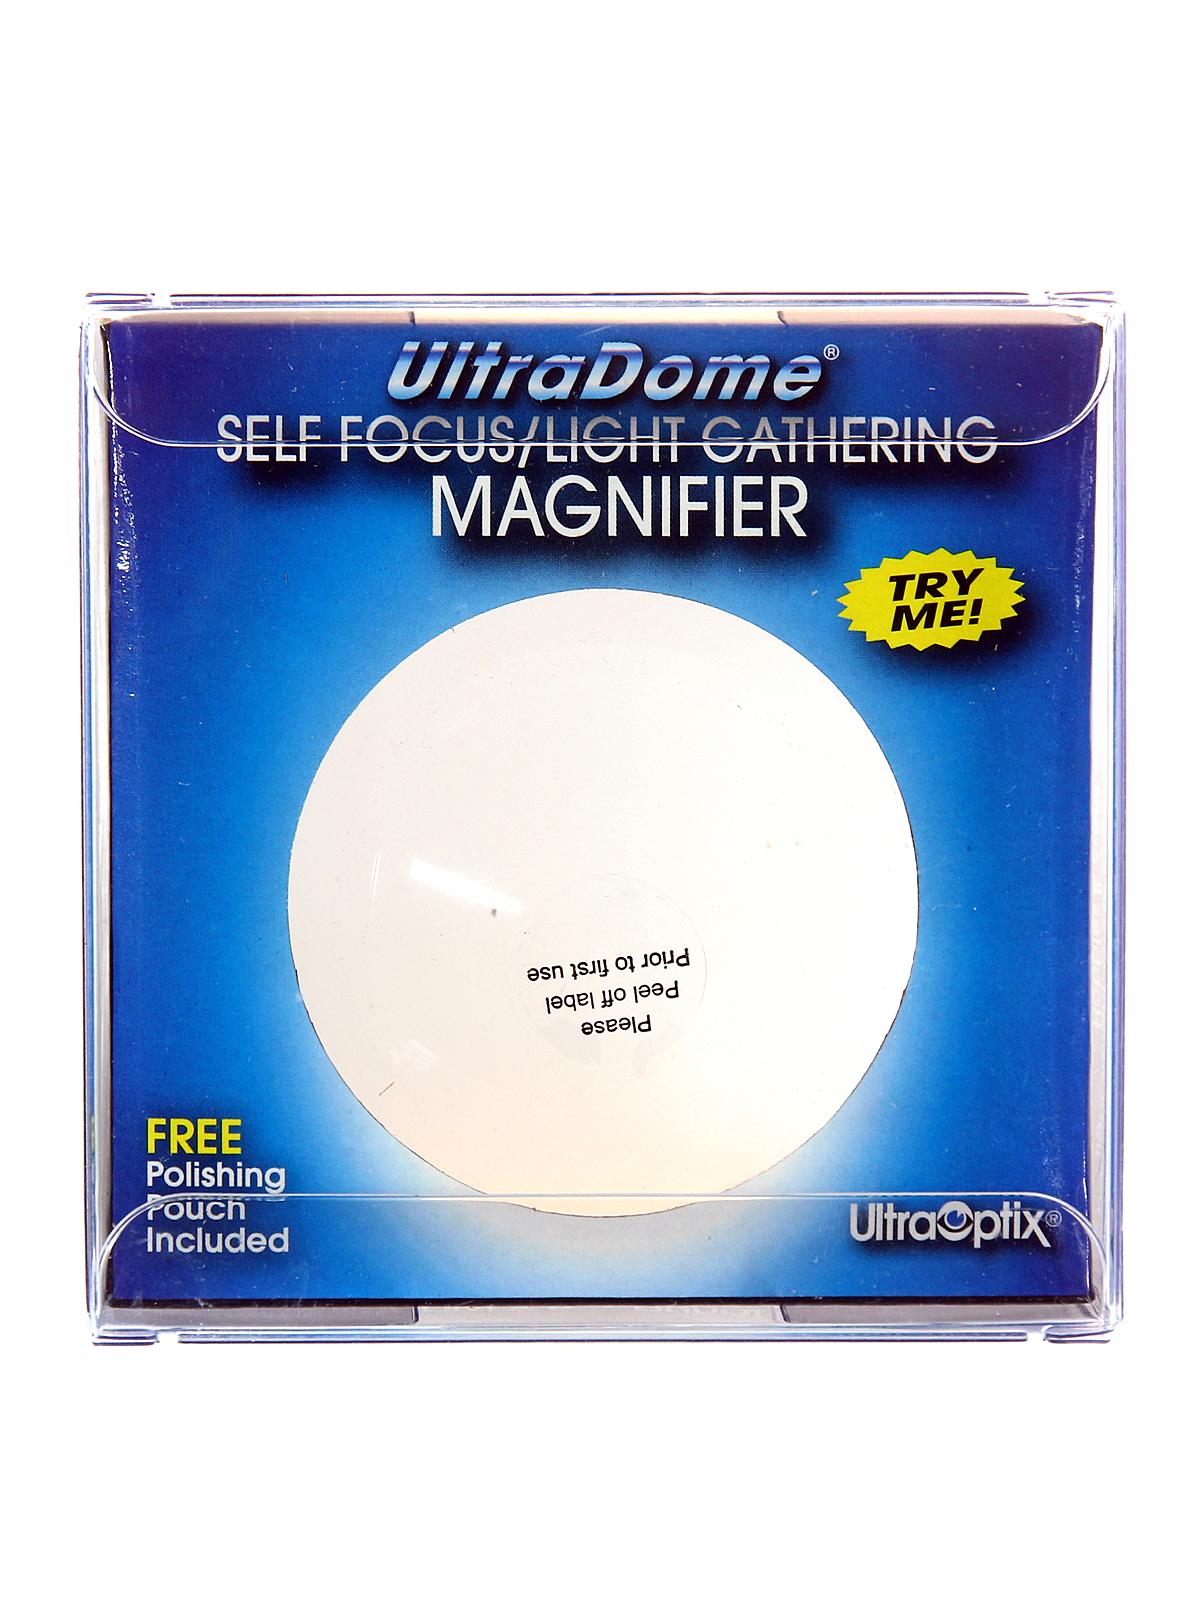 Ultradome Magnifier 3 In.